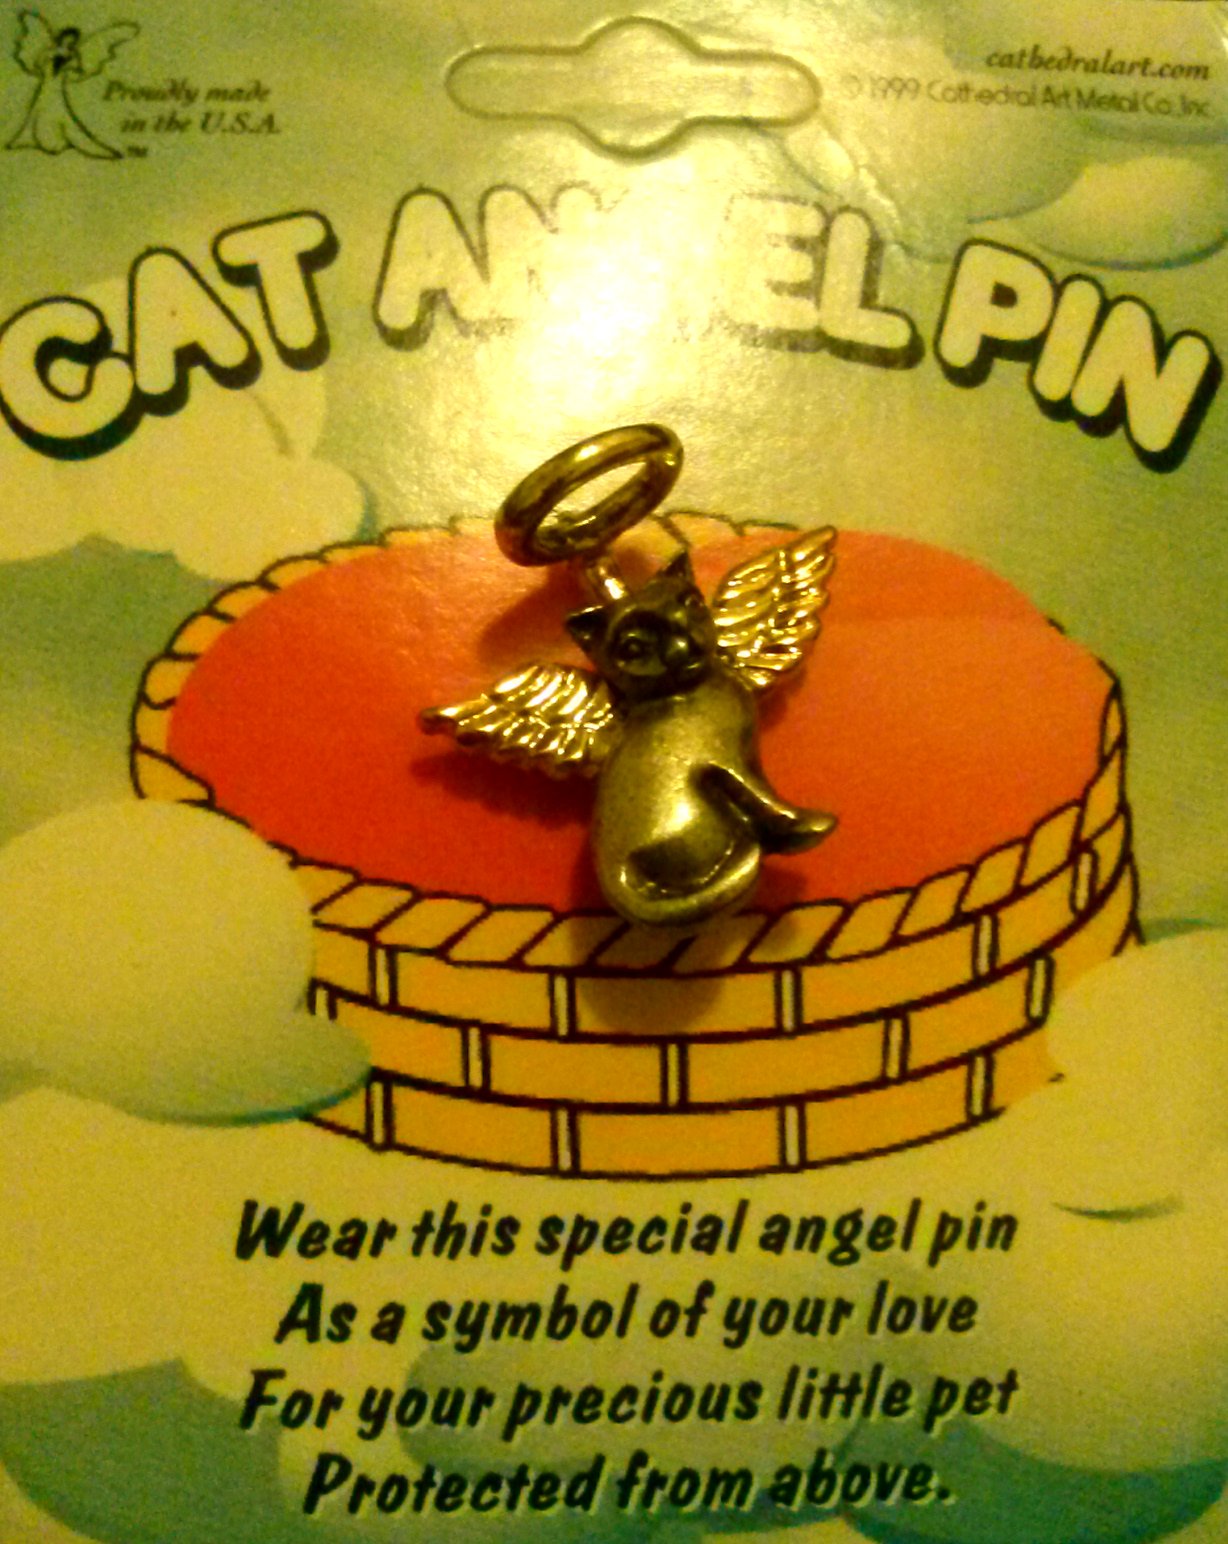 Cat Angel Pin